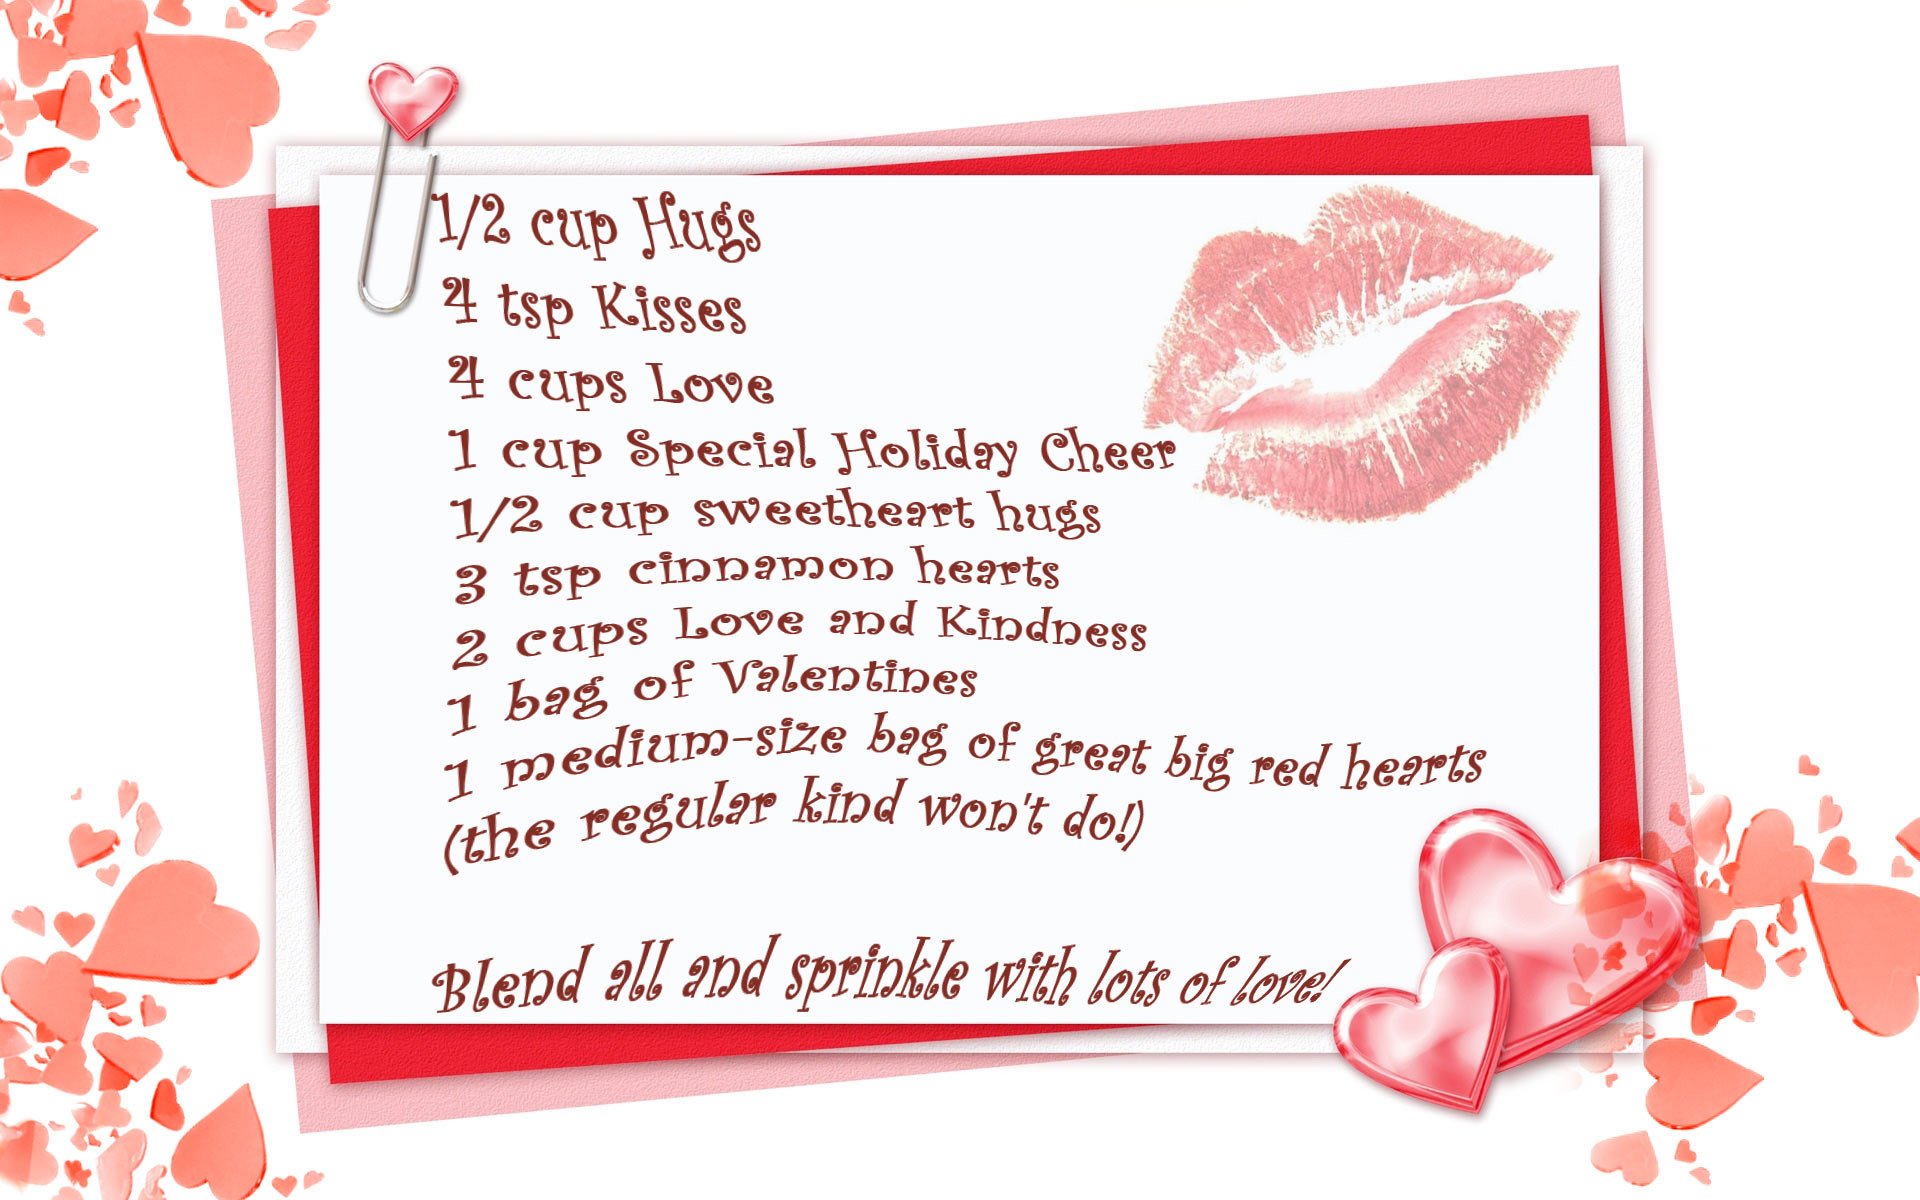 1920x1200 Cute love poems wallpaper download via heroeswallpapers.com